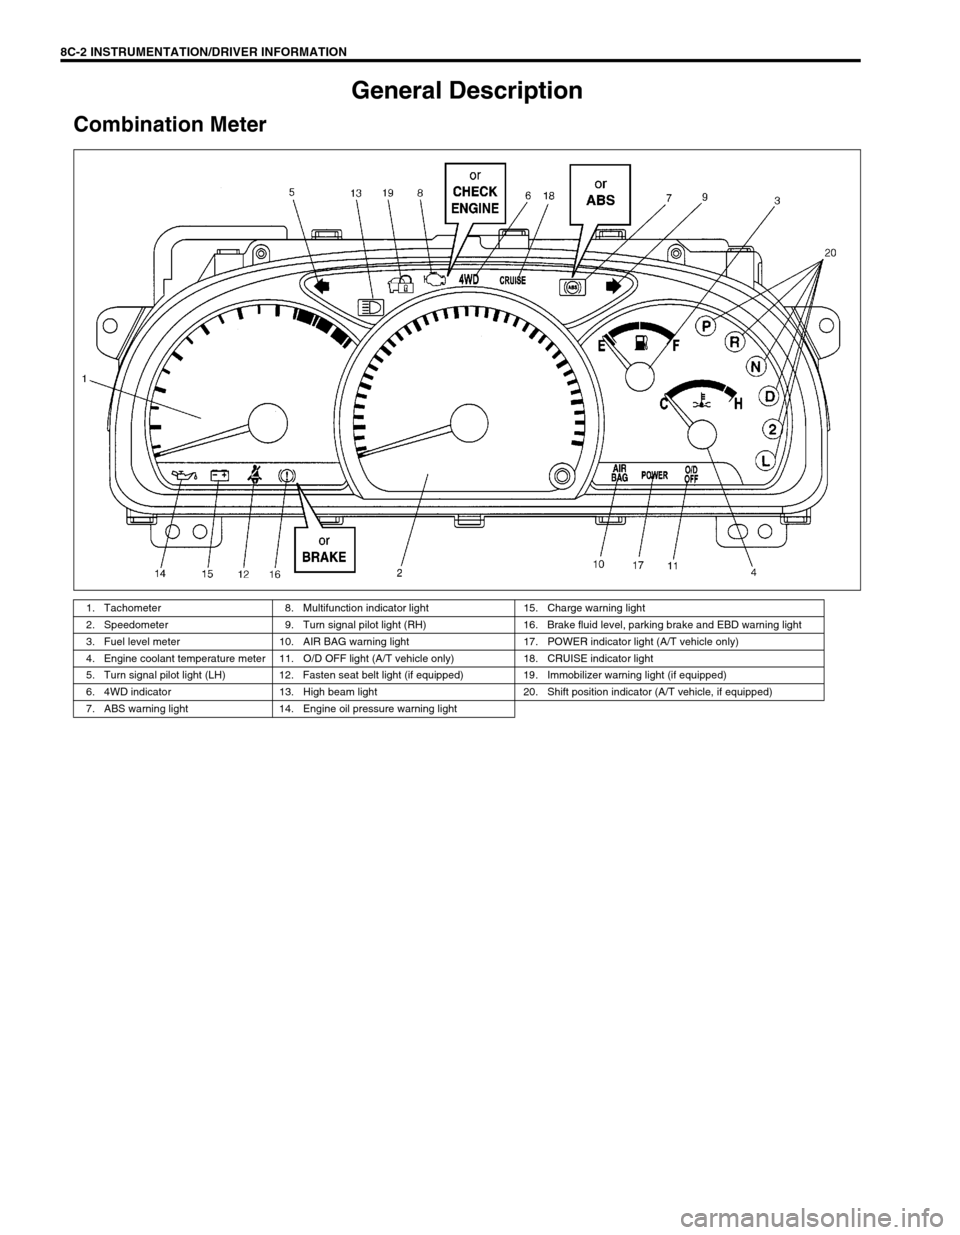 SUZUKI GRAND VITARA 1999 2.G Manual PDF 8C-2 INSTRUMENTATION/DRIVER INFORMATION
General Description
Combination Meter
1. Tachometer 8. Multifunction indicator light 15. Charge warning light
2. Speedometer 9. Turn signal pilot light (RH) 16.